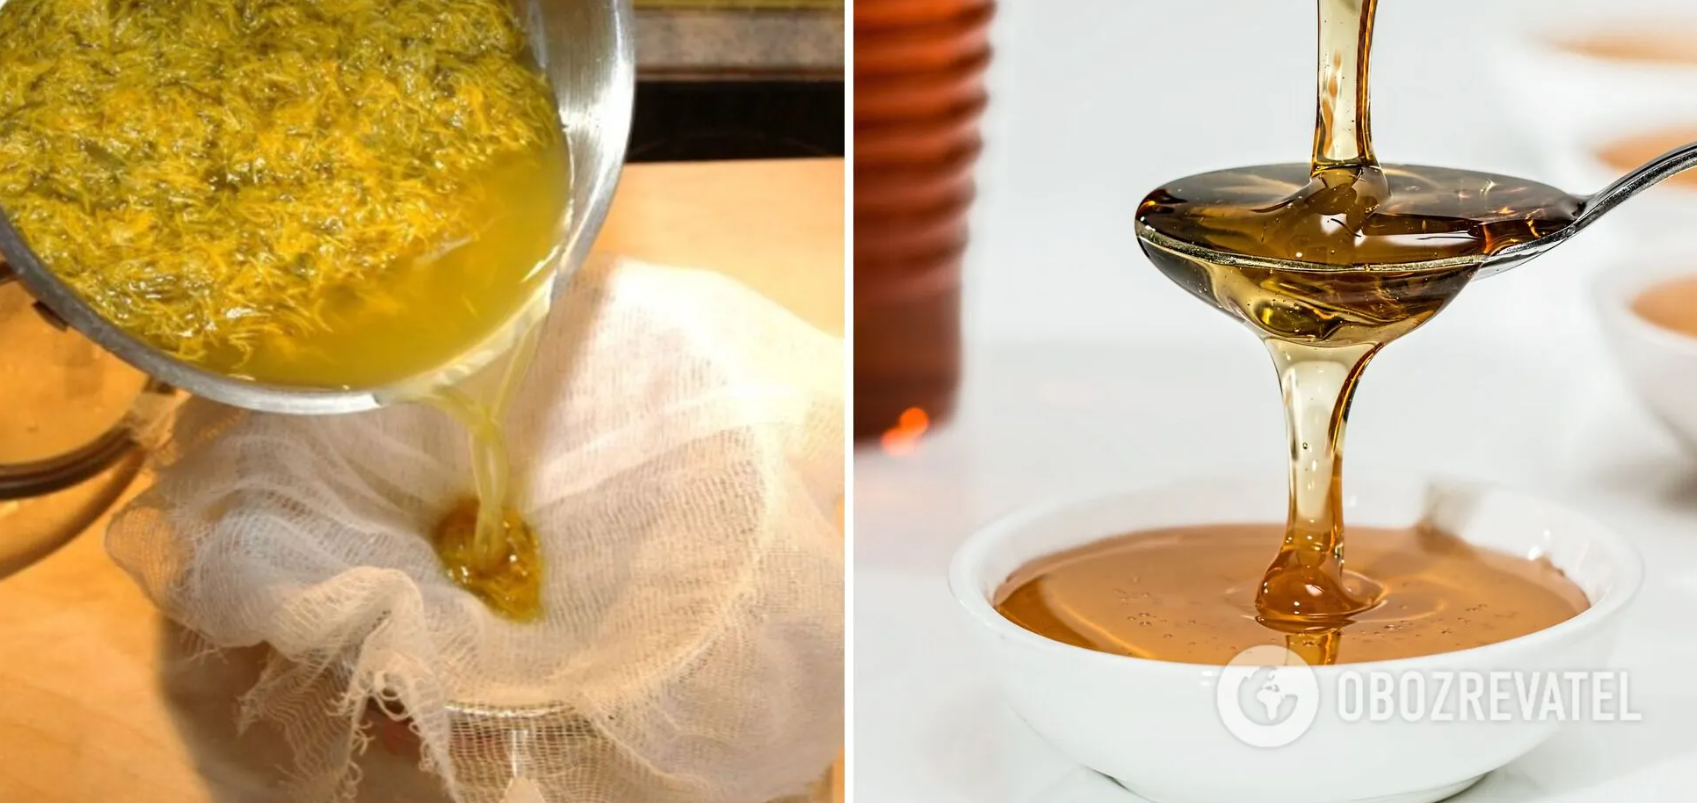 How to close dandelion honey properly